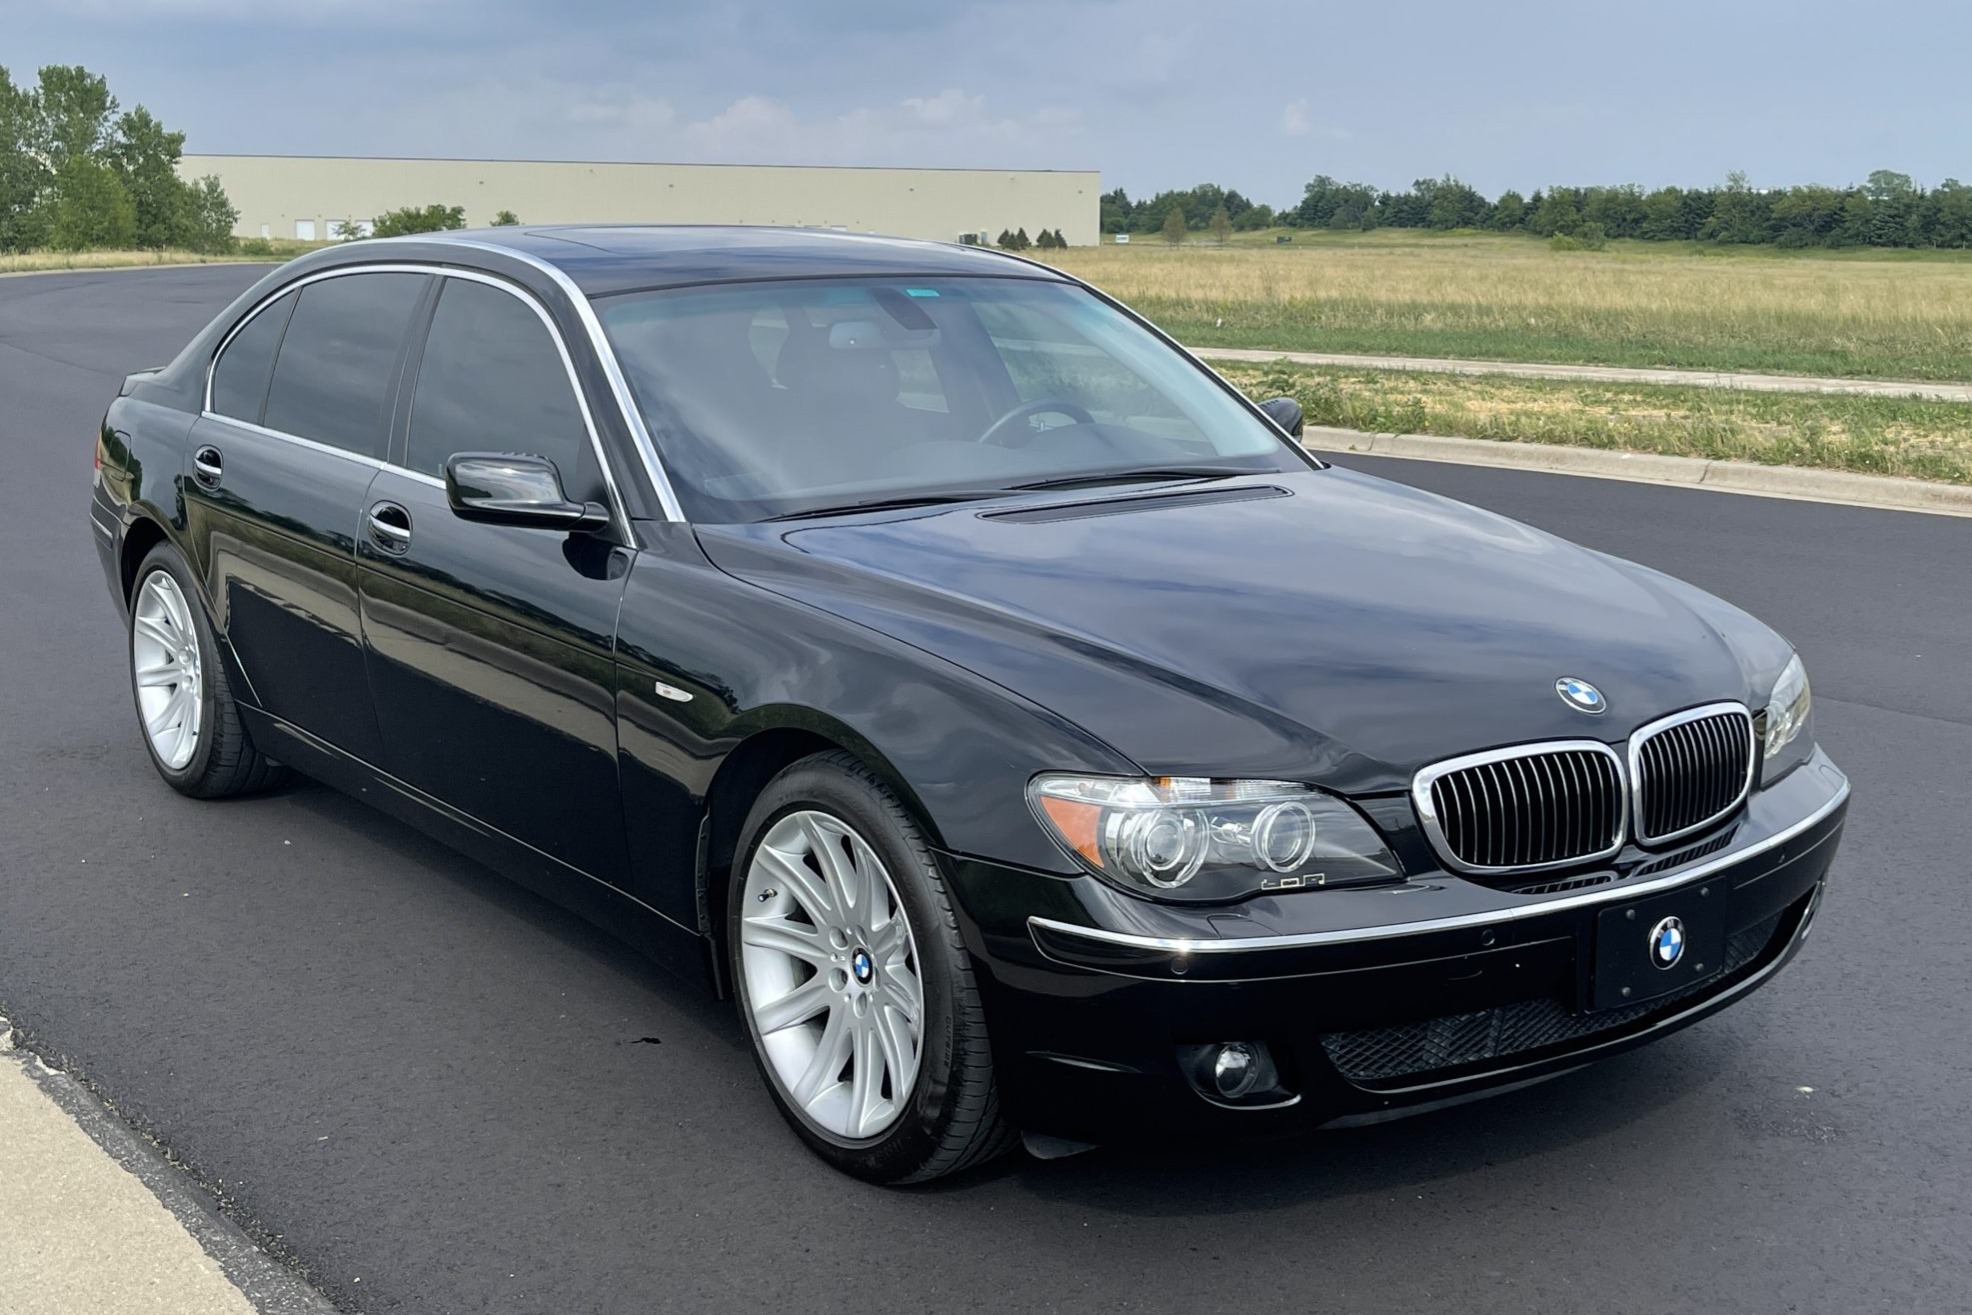 No Reserve: 30k-Mile 2006 BMW 750Li for sale on BaT Auctions - sold for  $23,250 on June 16, 2021 (Lot #49,737) | Bring a Trailer